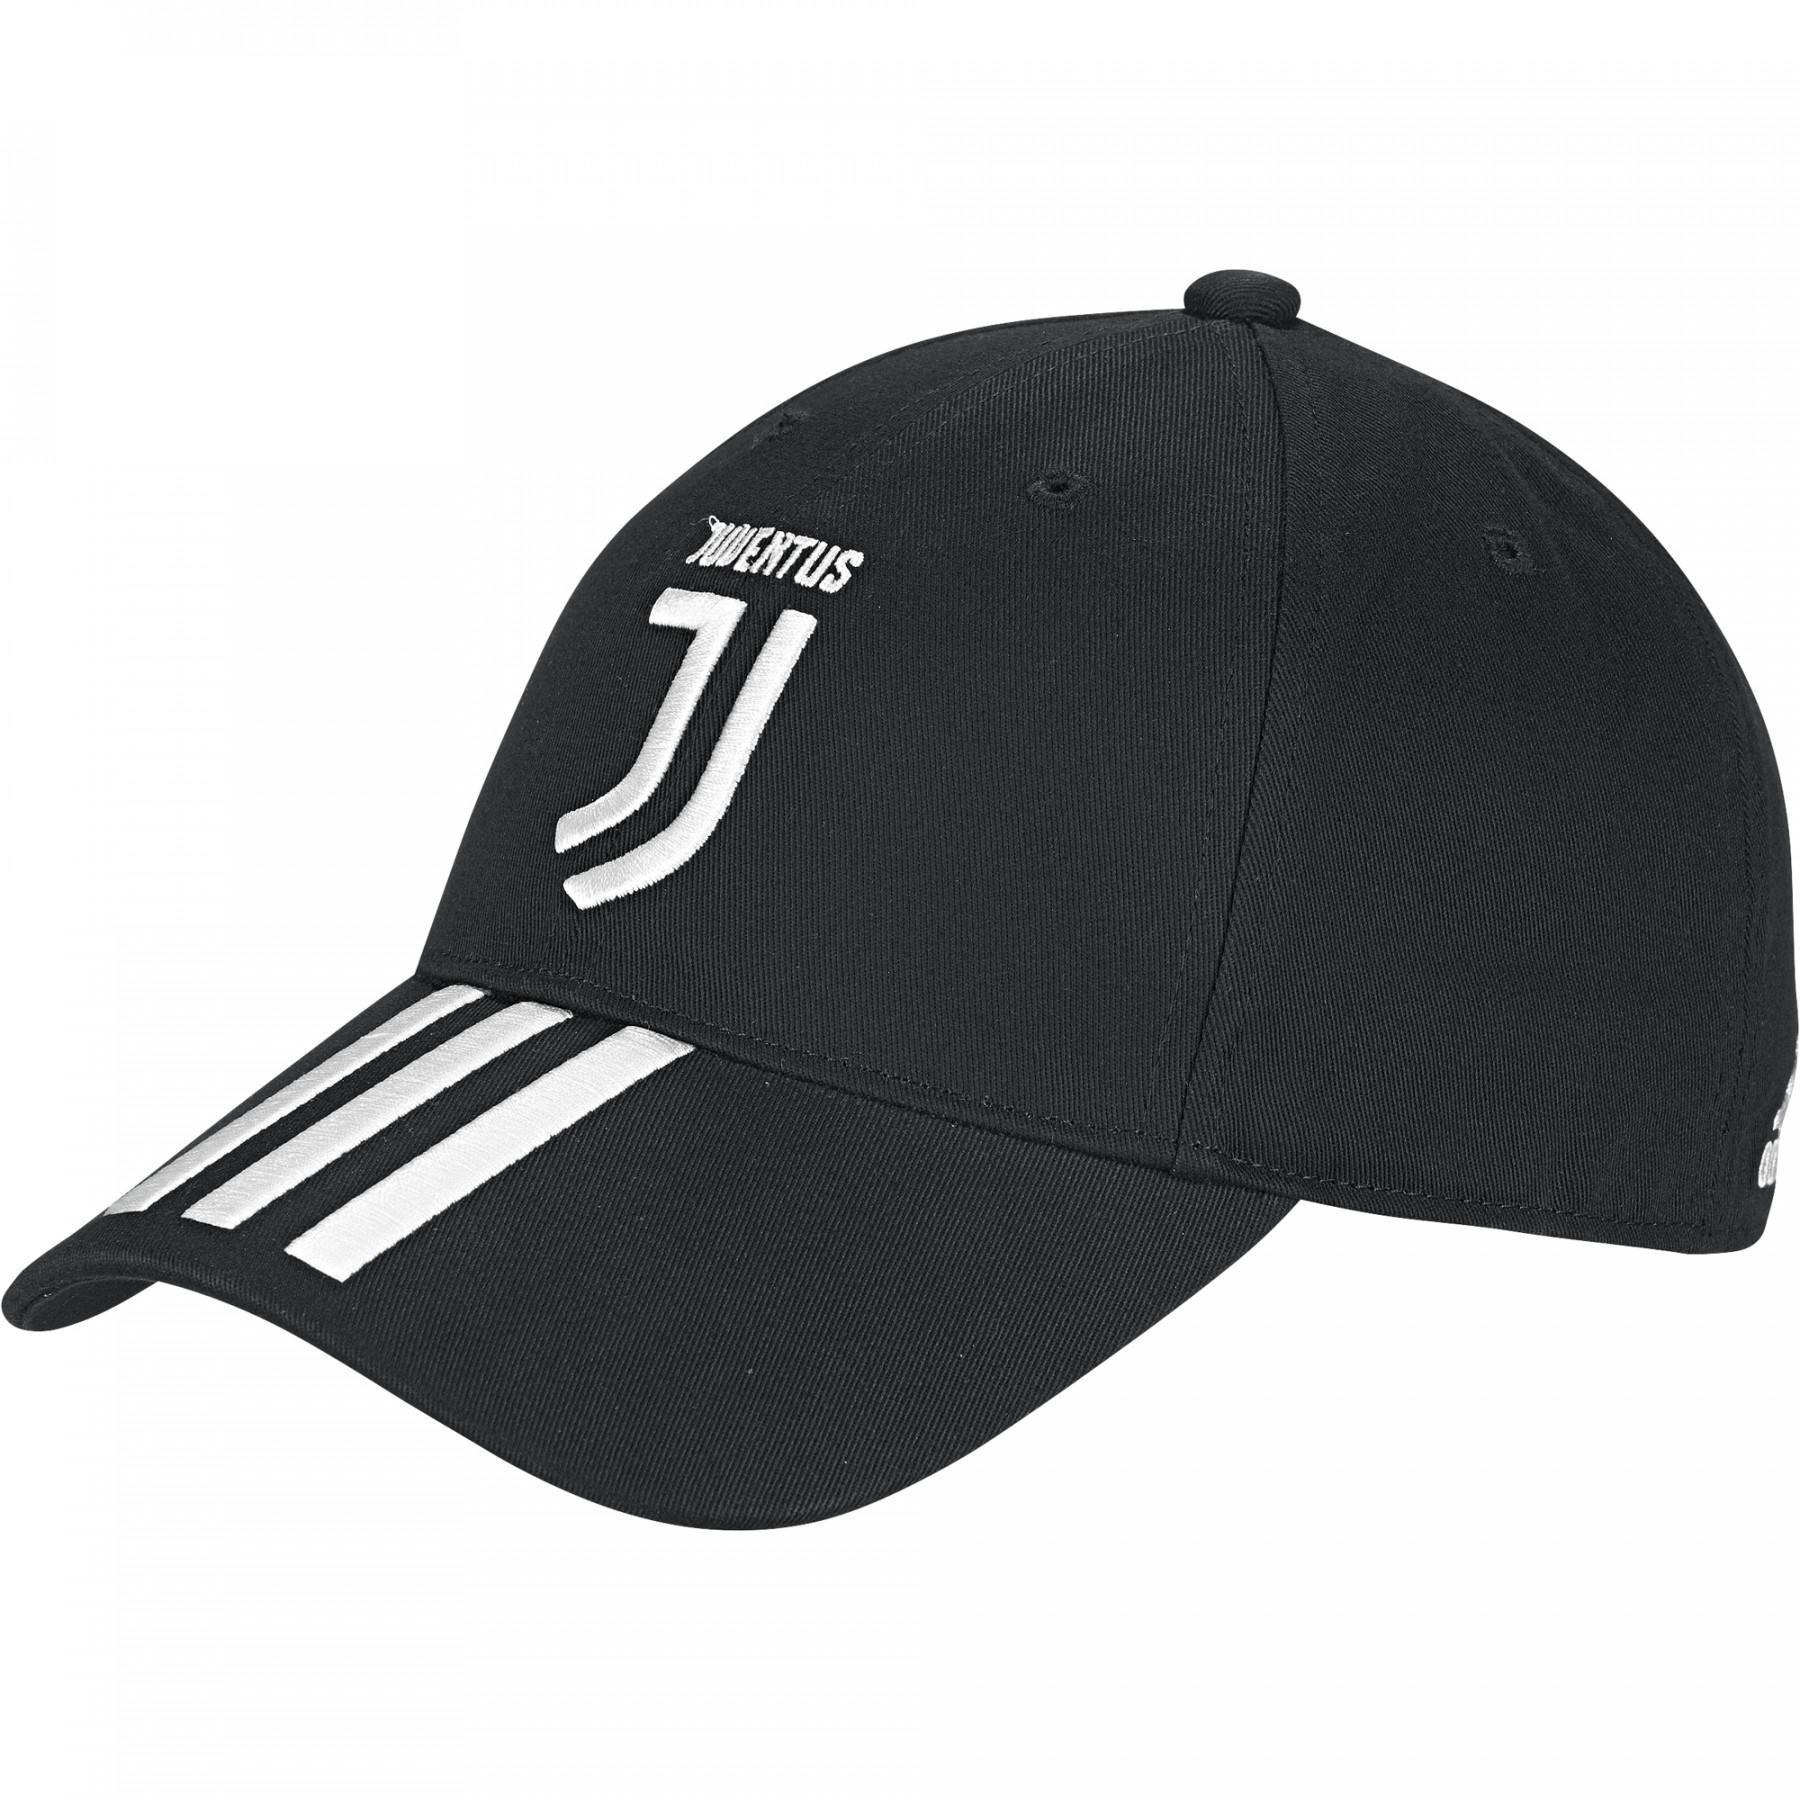 Boné Juventus